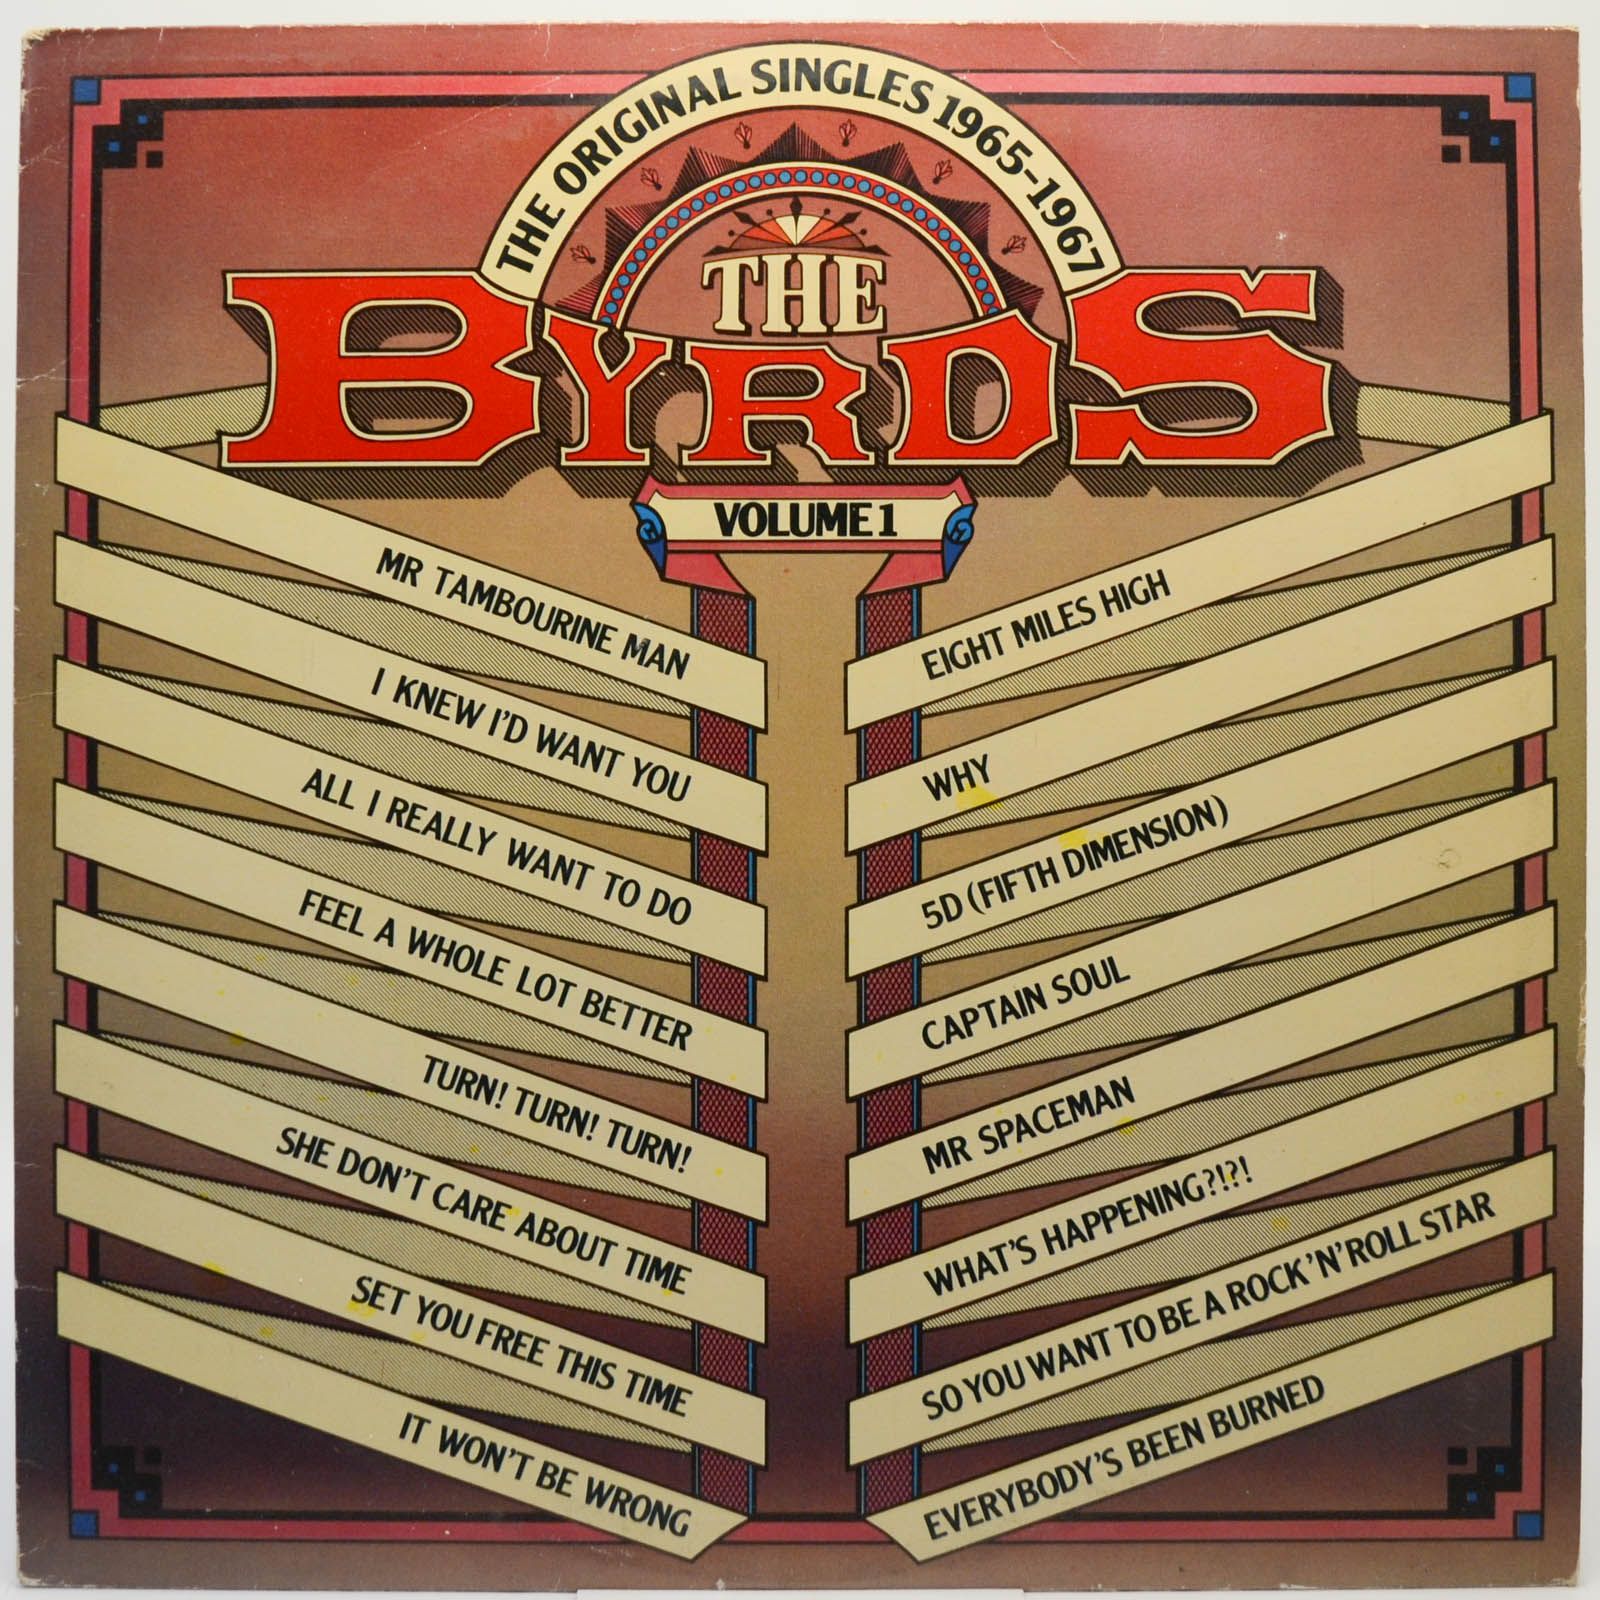 Byrds — The Original Singles 1965-1967 Volume 1, 1980